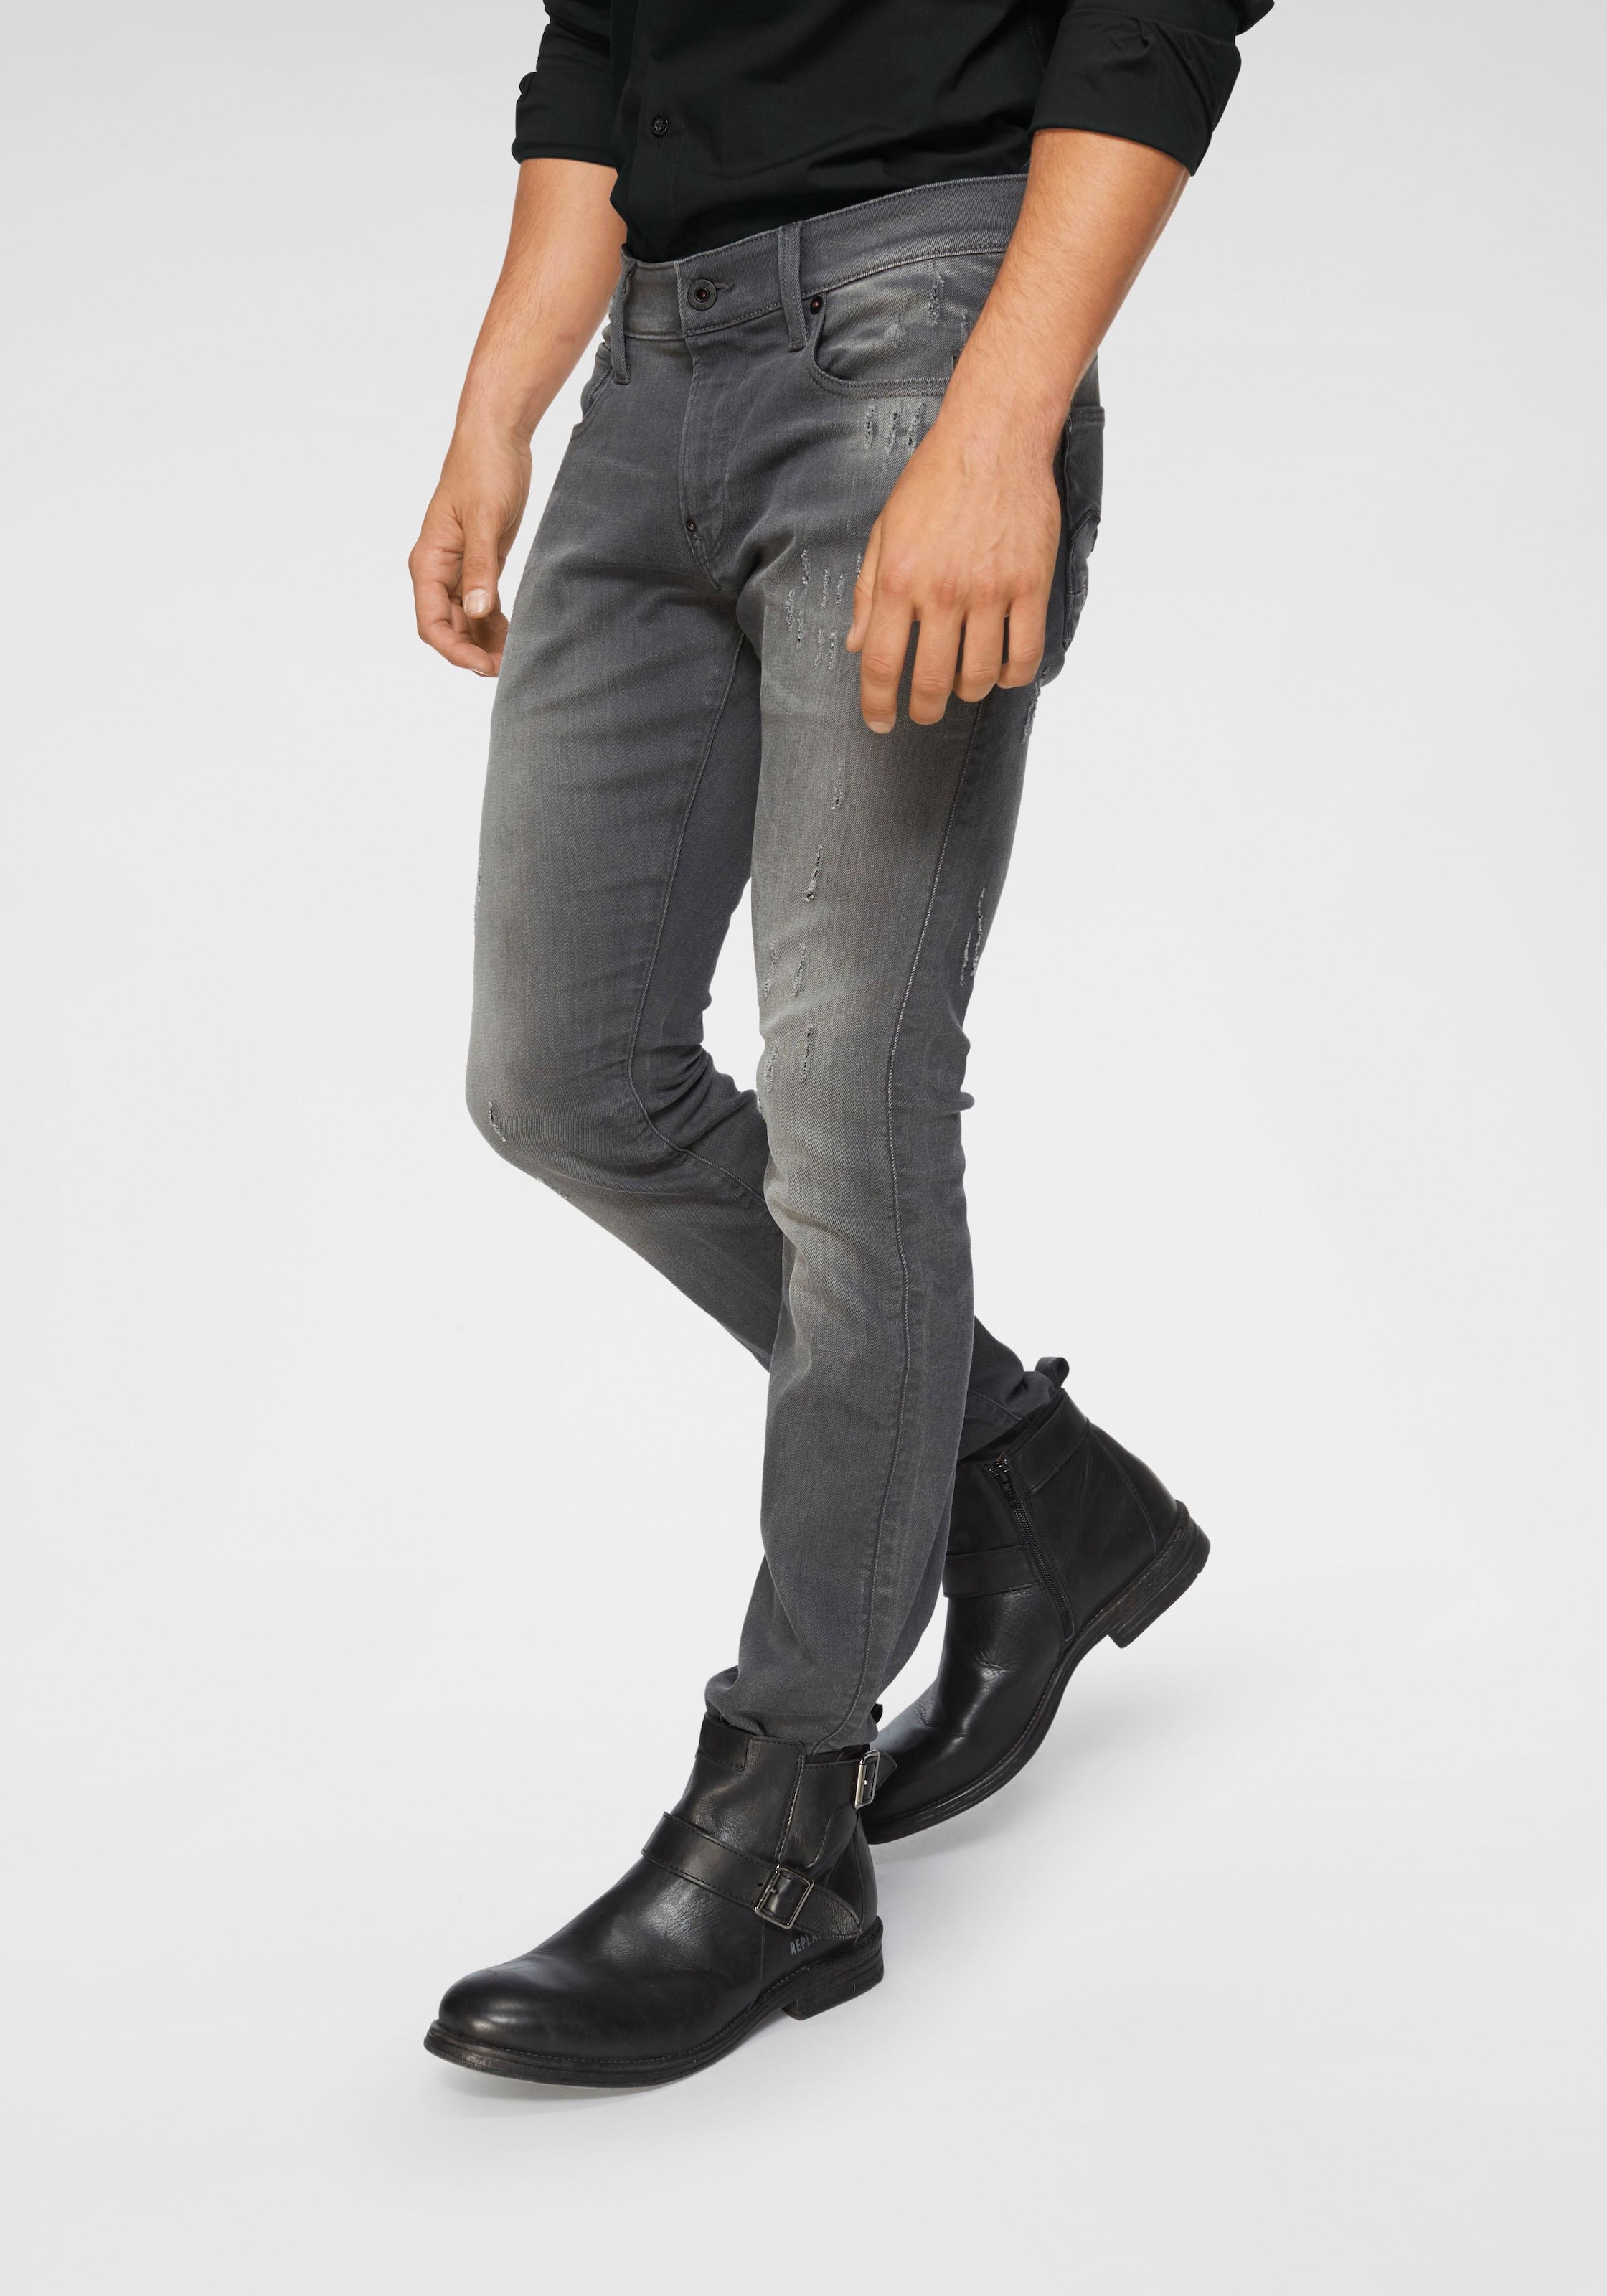 ♕ G-Star RAW Slim-fit-Jeans versandkostenfrei »Skinny« auf